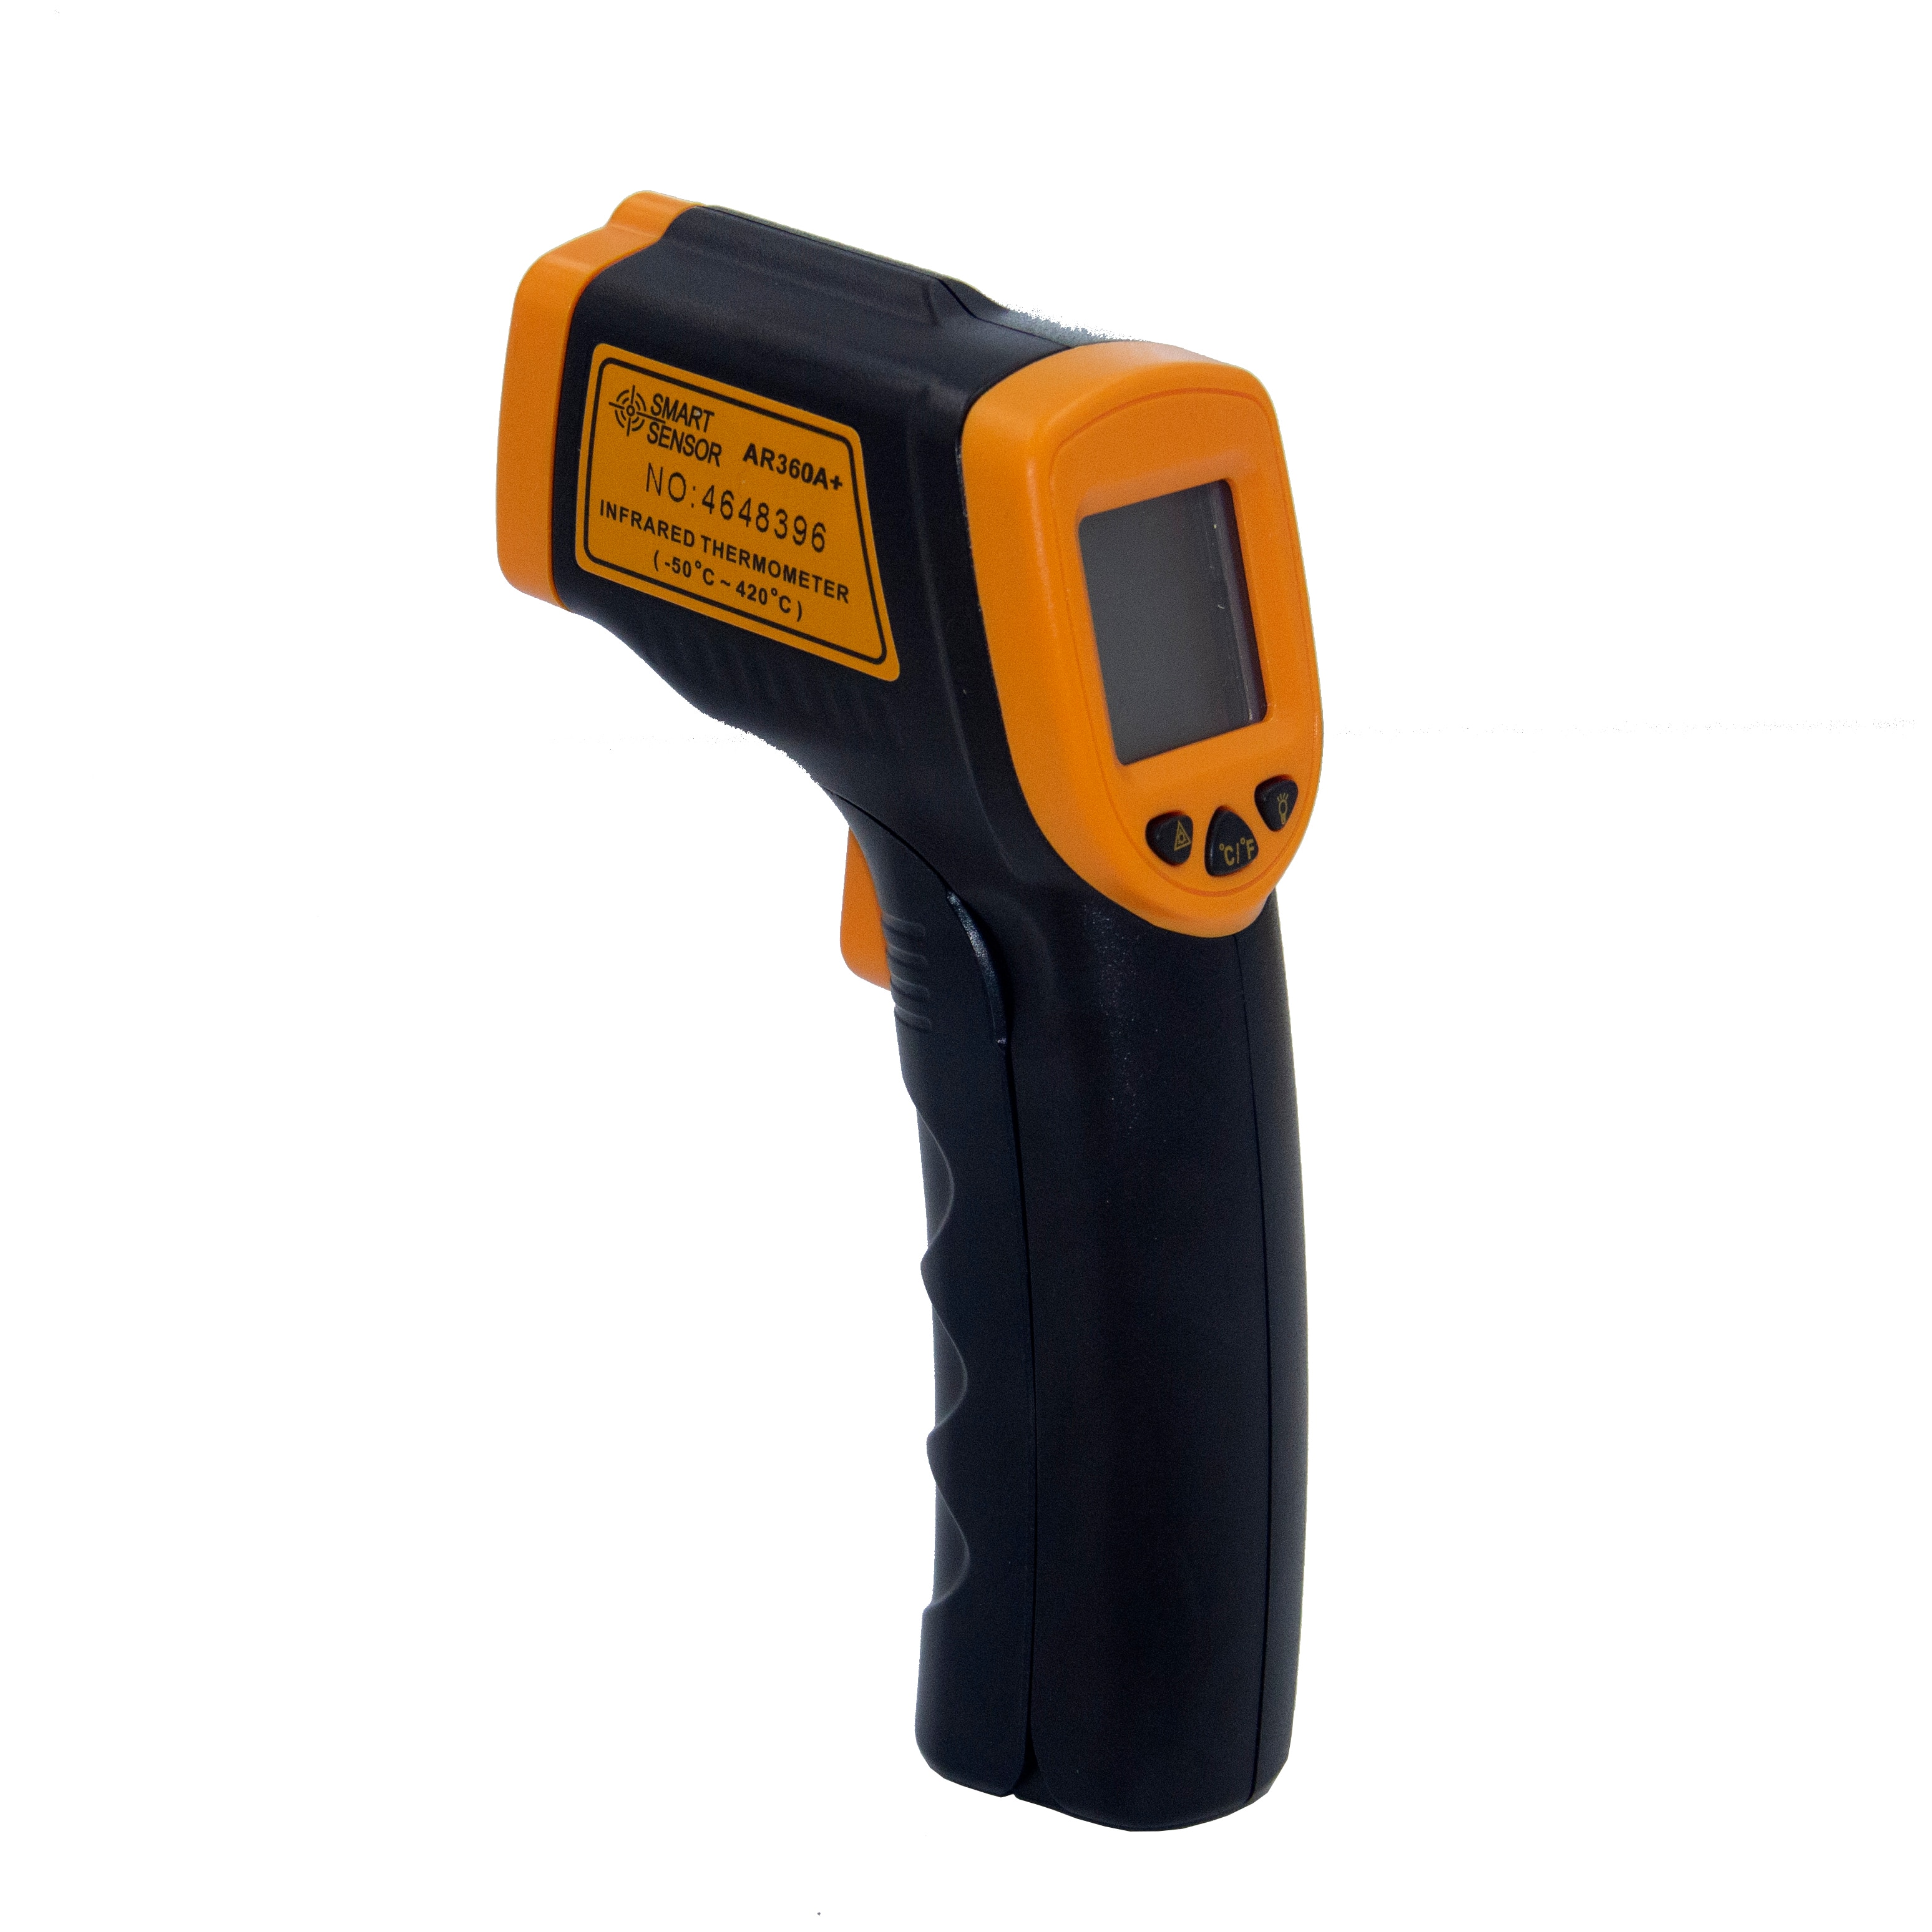 AR360A Industry Infrared Temperature Gun Non Contact Infrared Digital Temperature Gun Meter Termometer Термометр цифровой -50-420°C